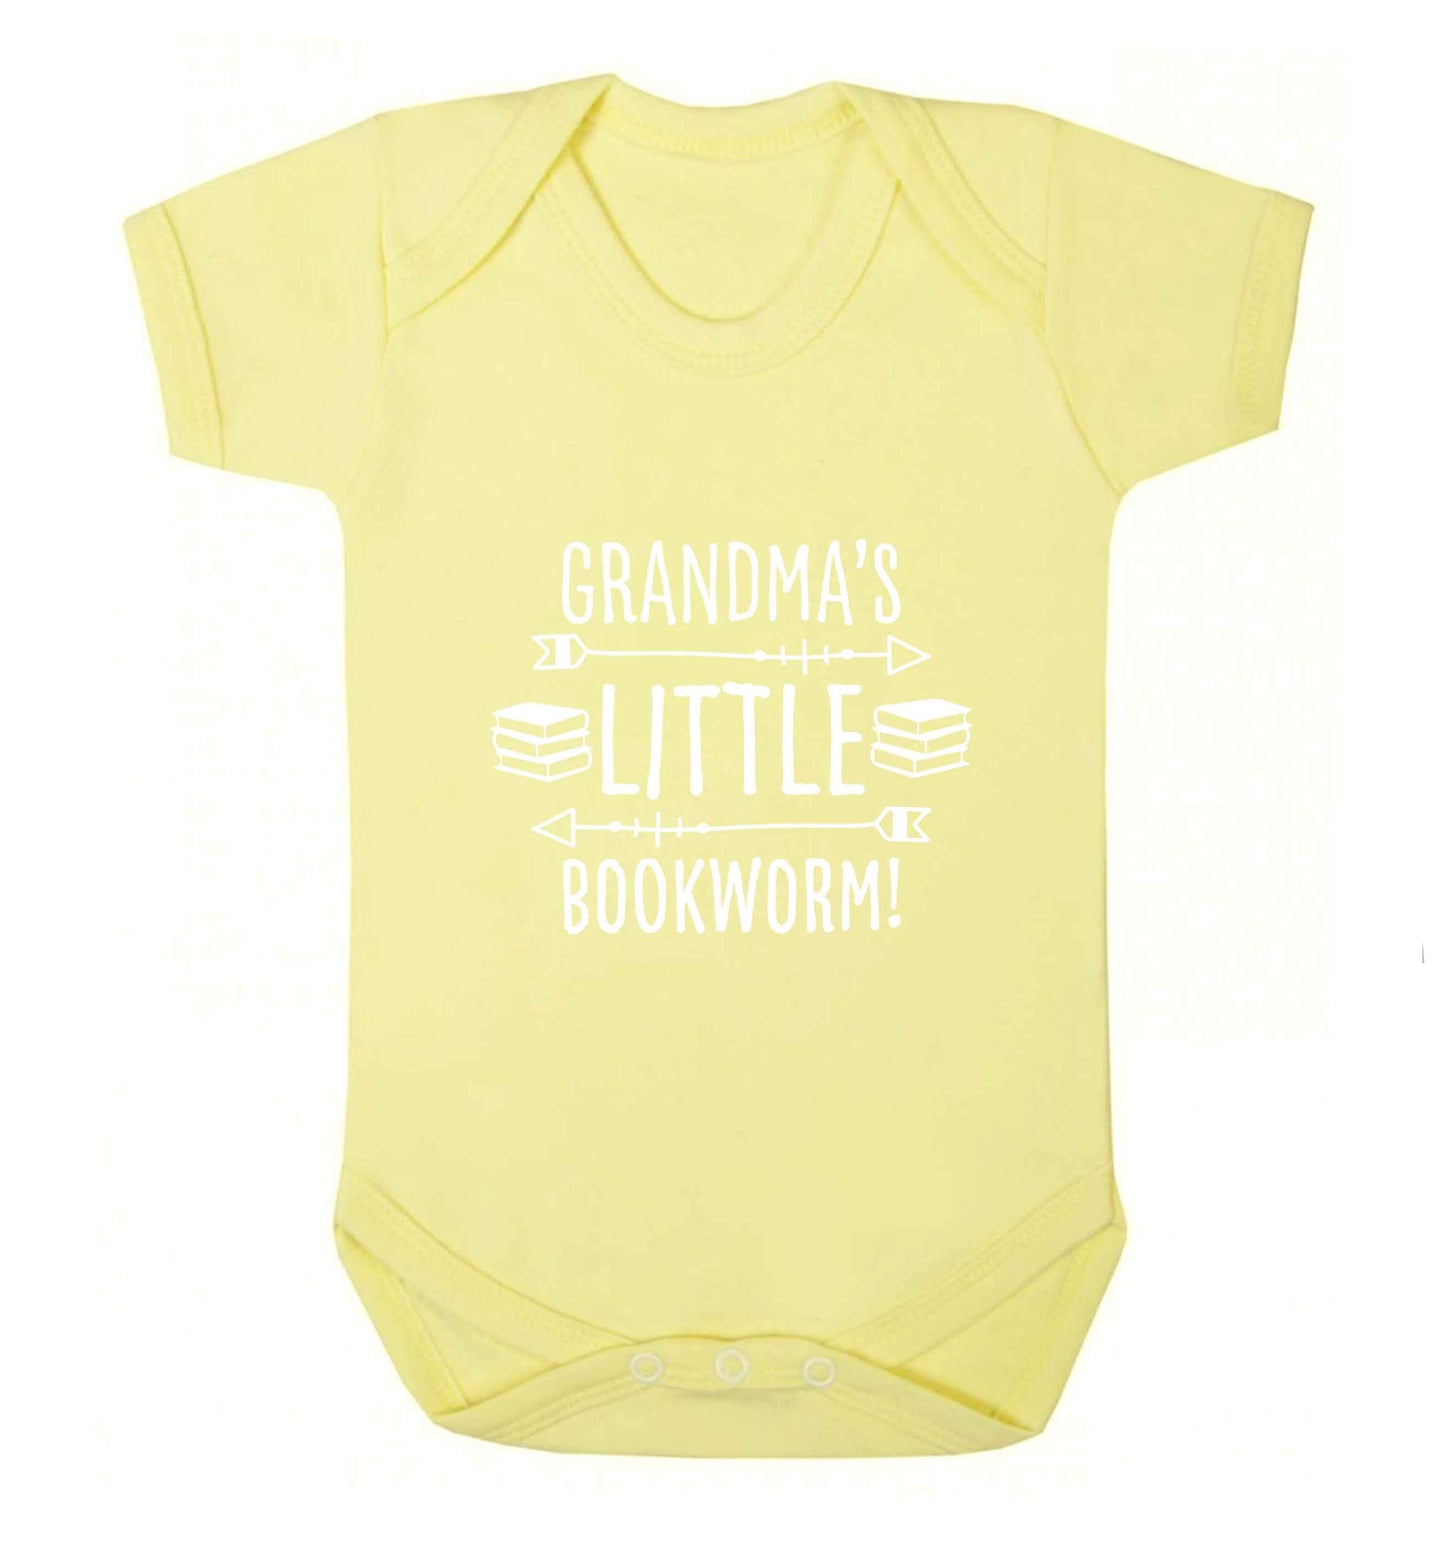 Grandma's little bookworm baby vest pale yellow 18-24 months